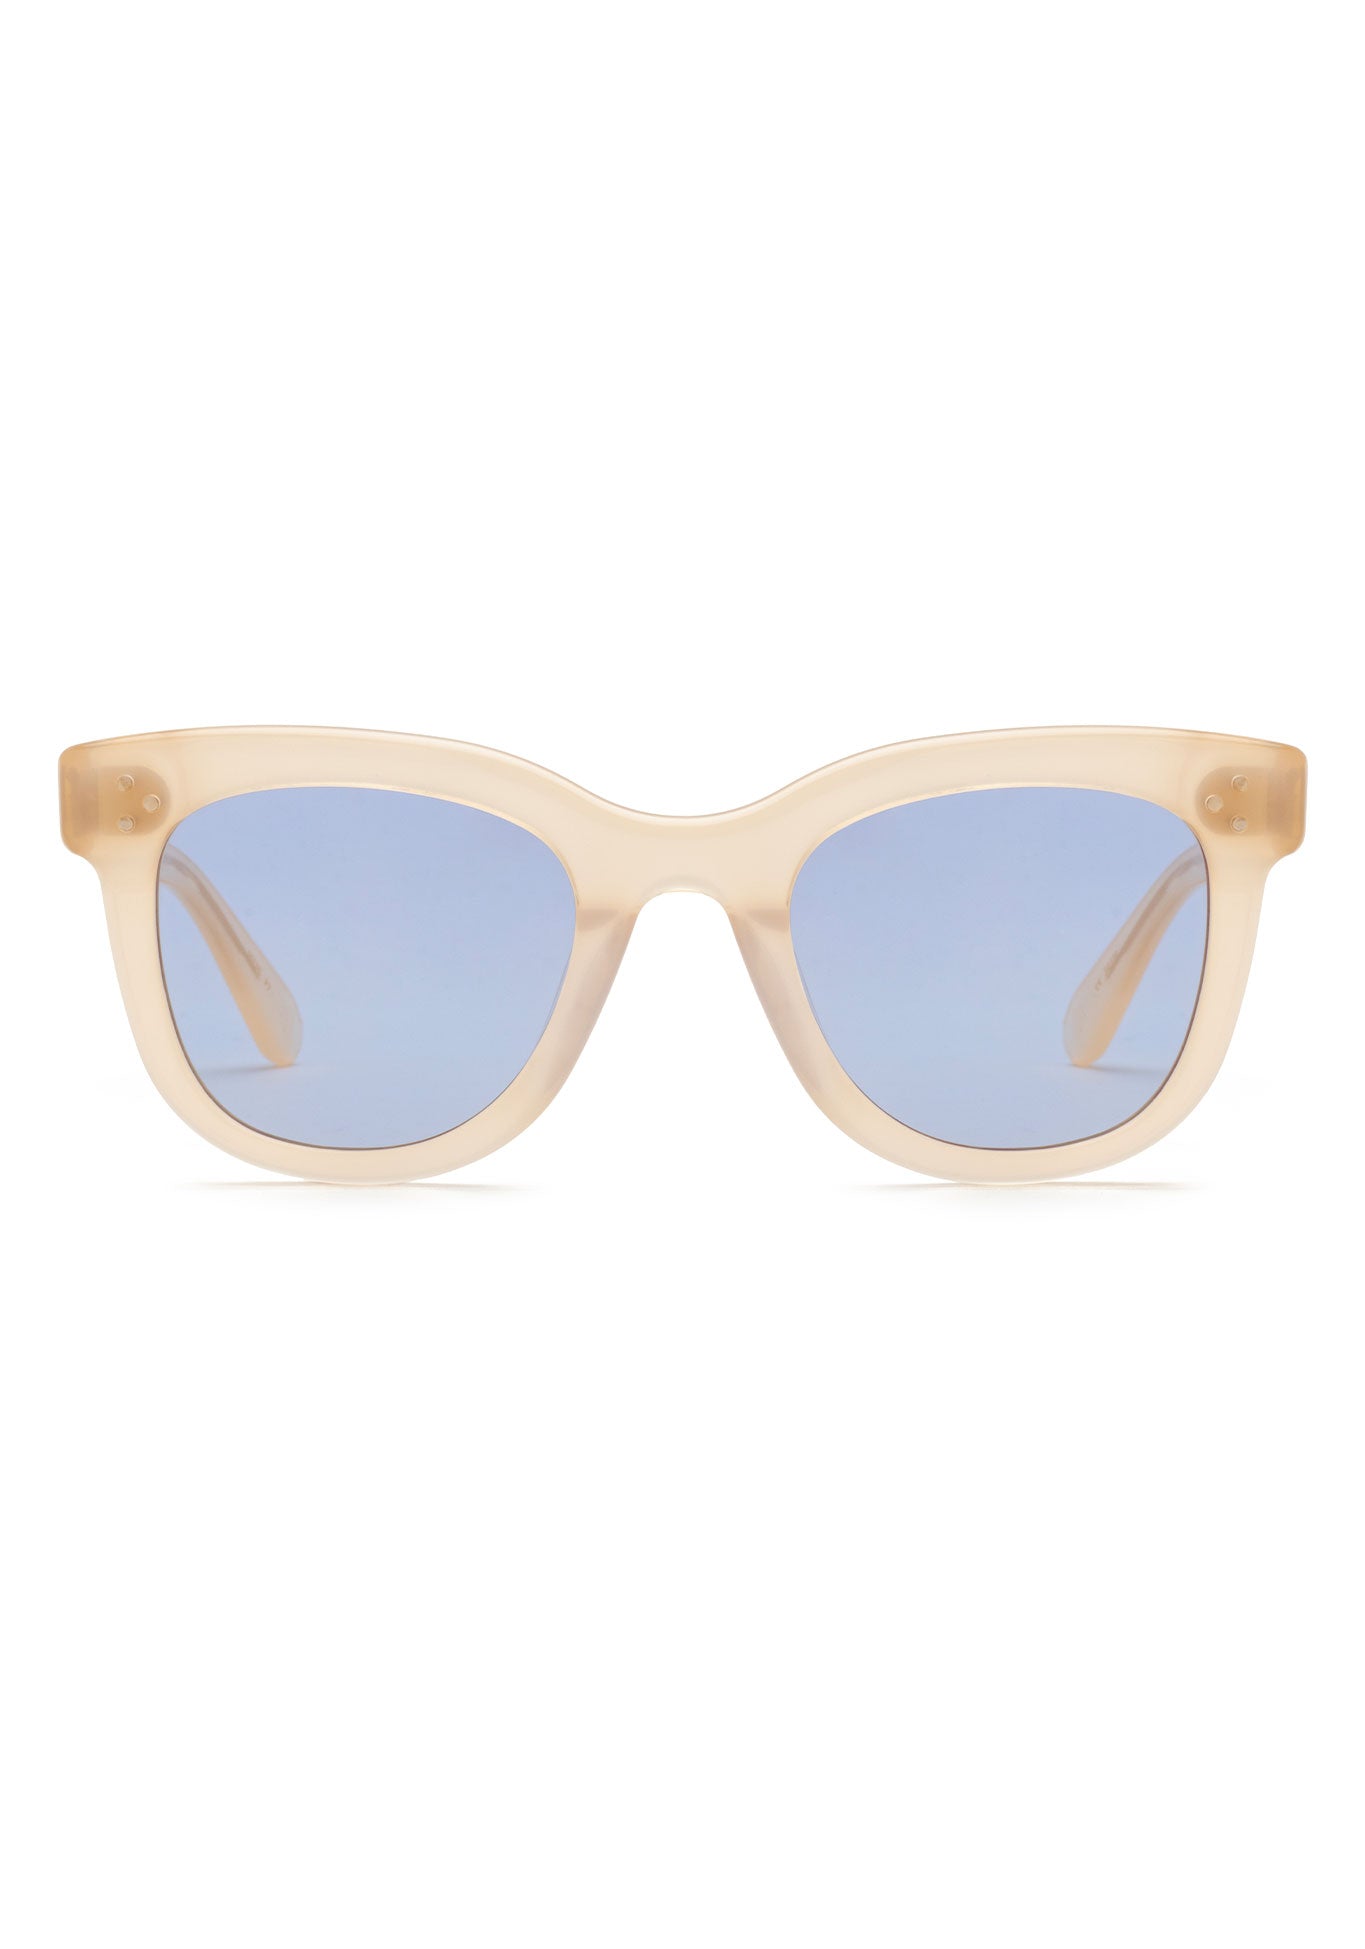 KREWE SUNGLASSES - JENA | Blonde + Custom Vanity Tint handcrafted, luxury blonde oversized sunglasses with custom blue tinted lenses 